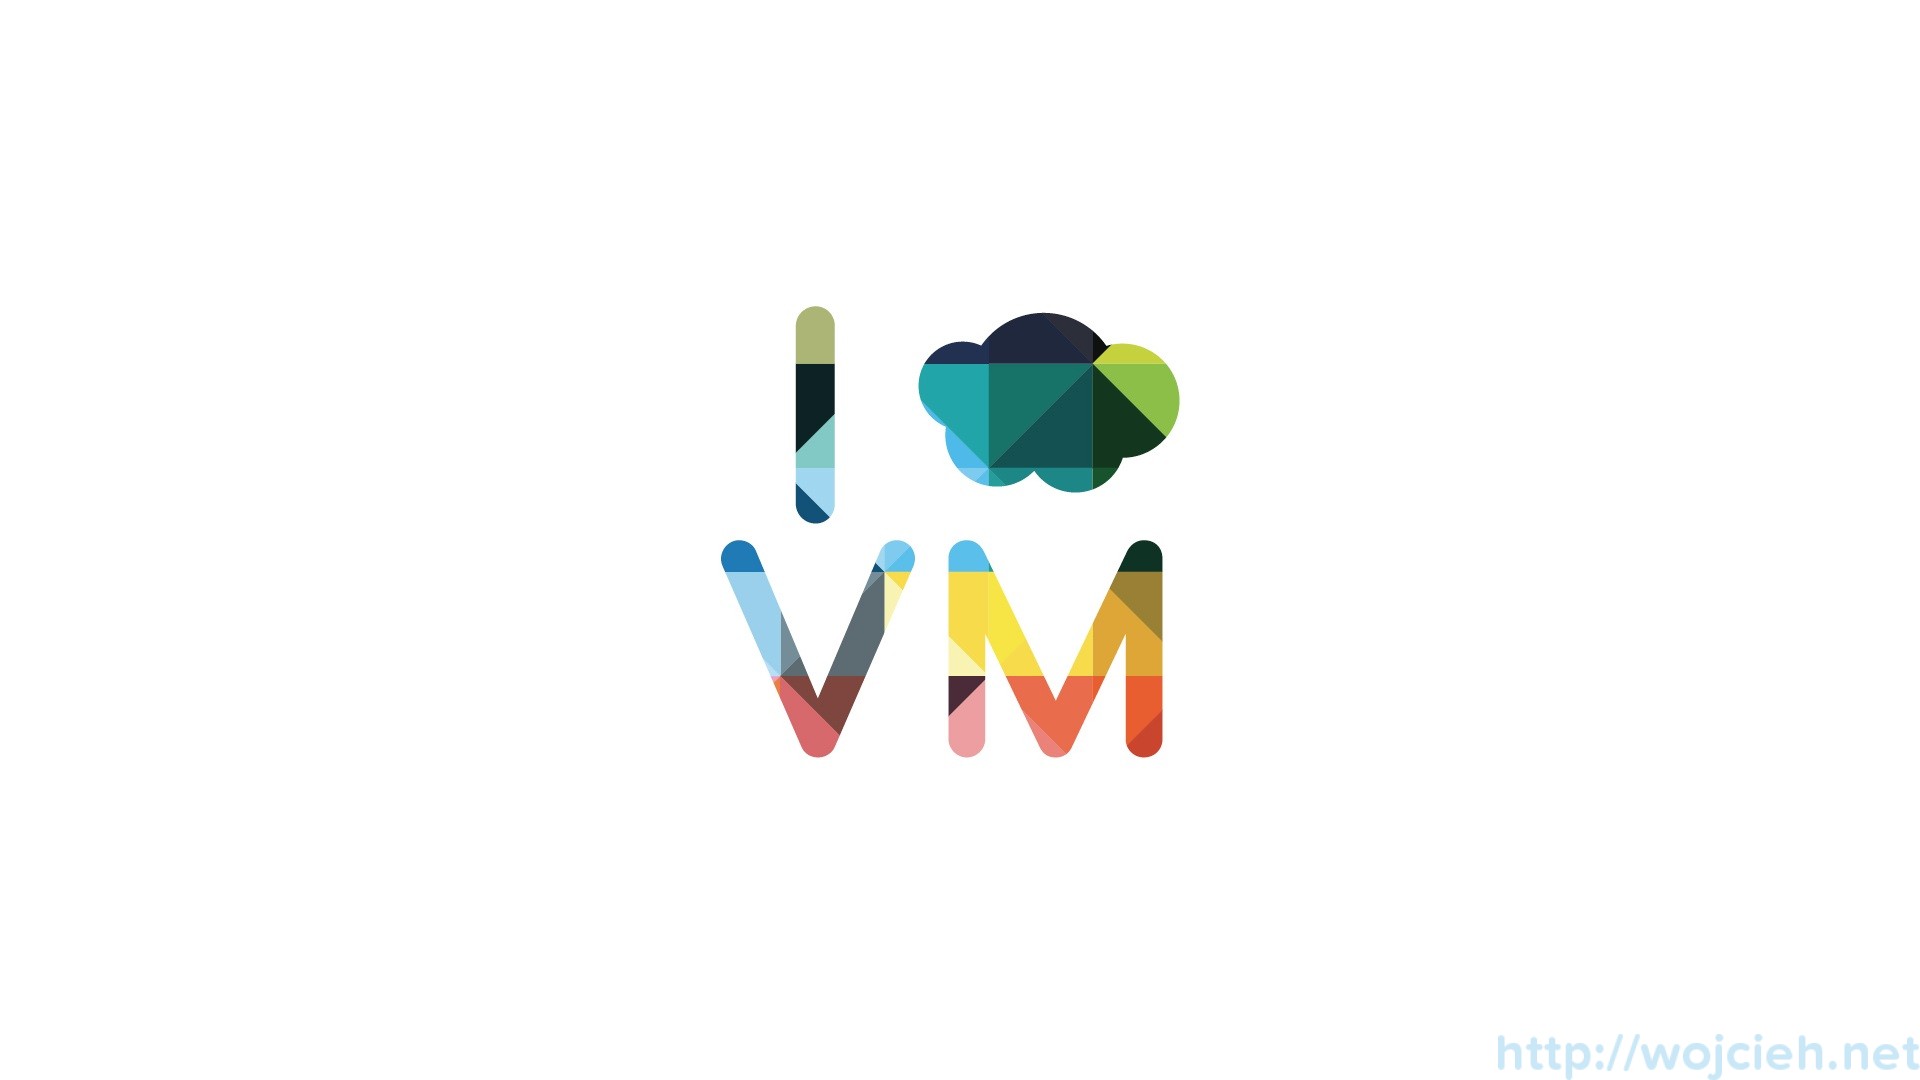 vmware wallpaper,produkt,schriftart,grafik,grafikdesign,diagramm